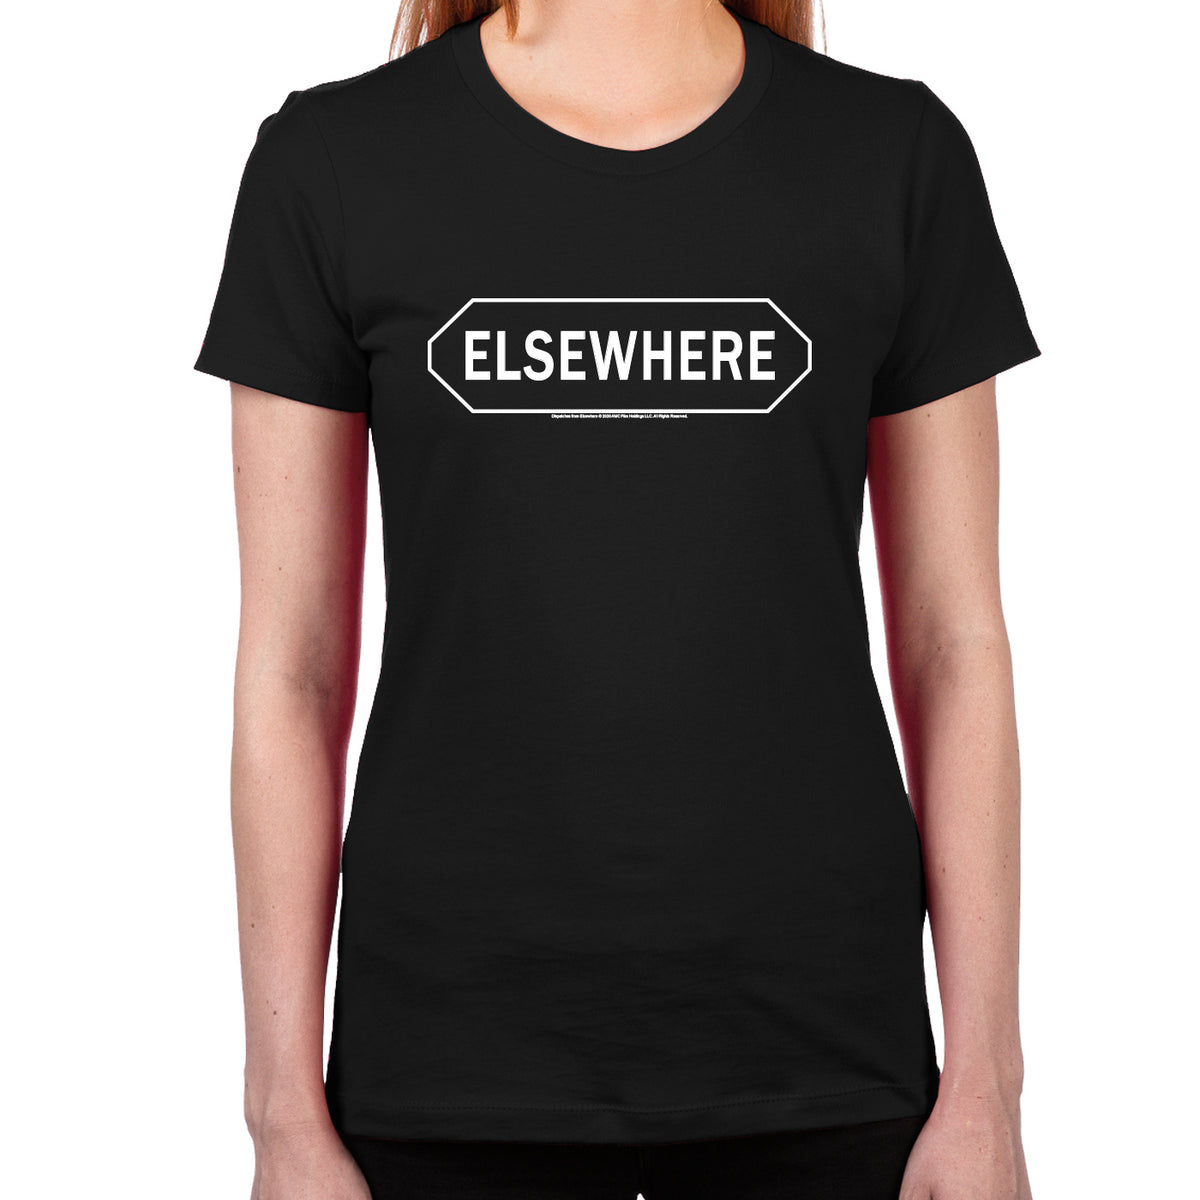 Elsewhere Women's T-Shirt